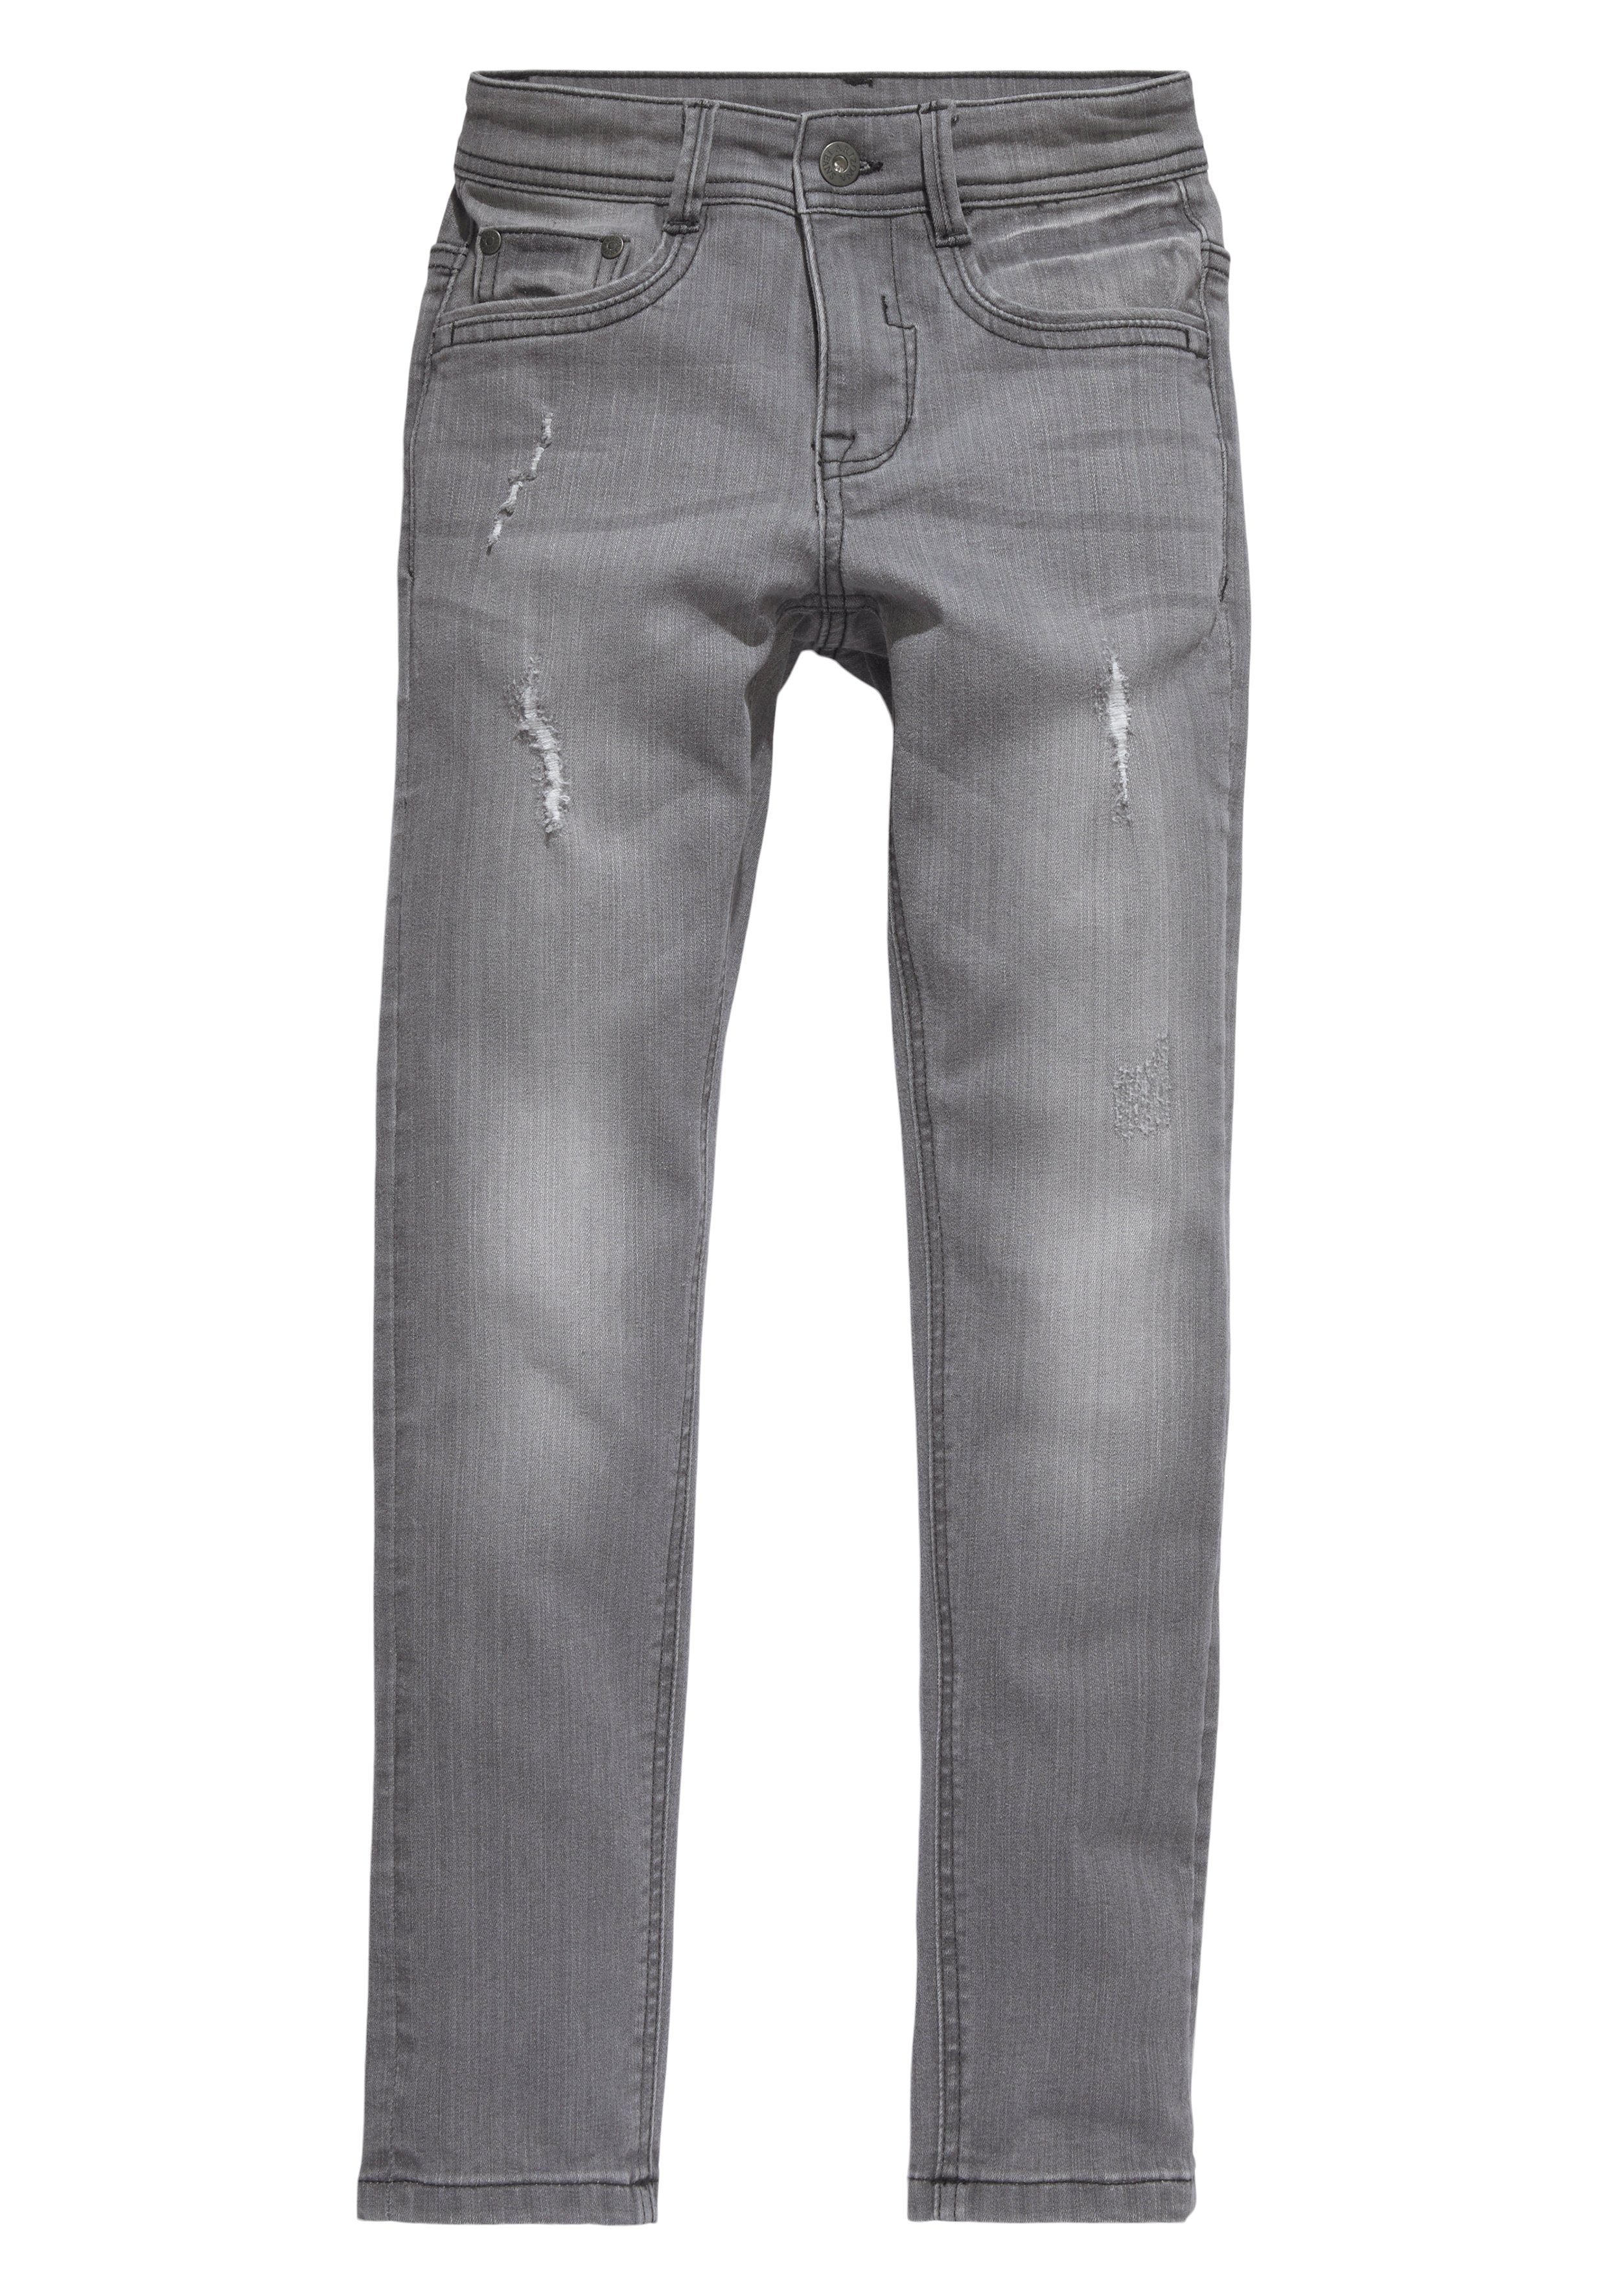 mit Form Waschung toller schmale Stretch-Jeans Arizona